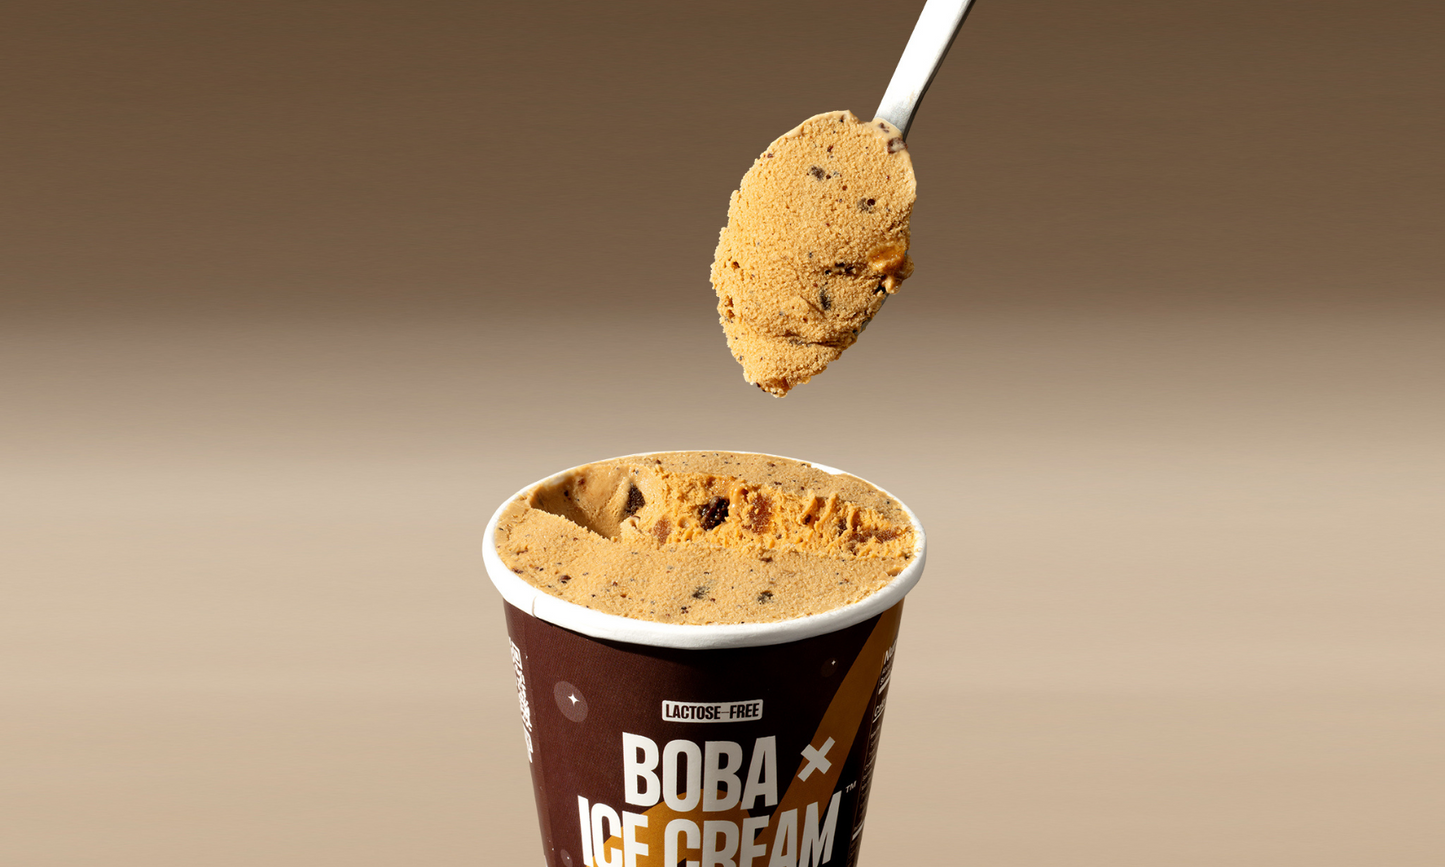 Boba x Ice Cream